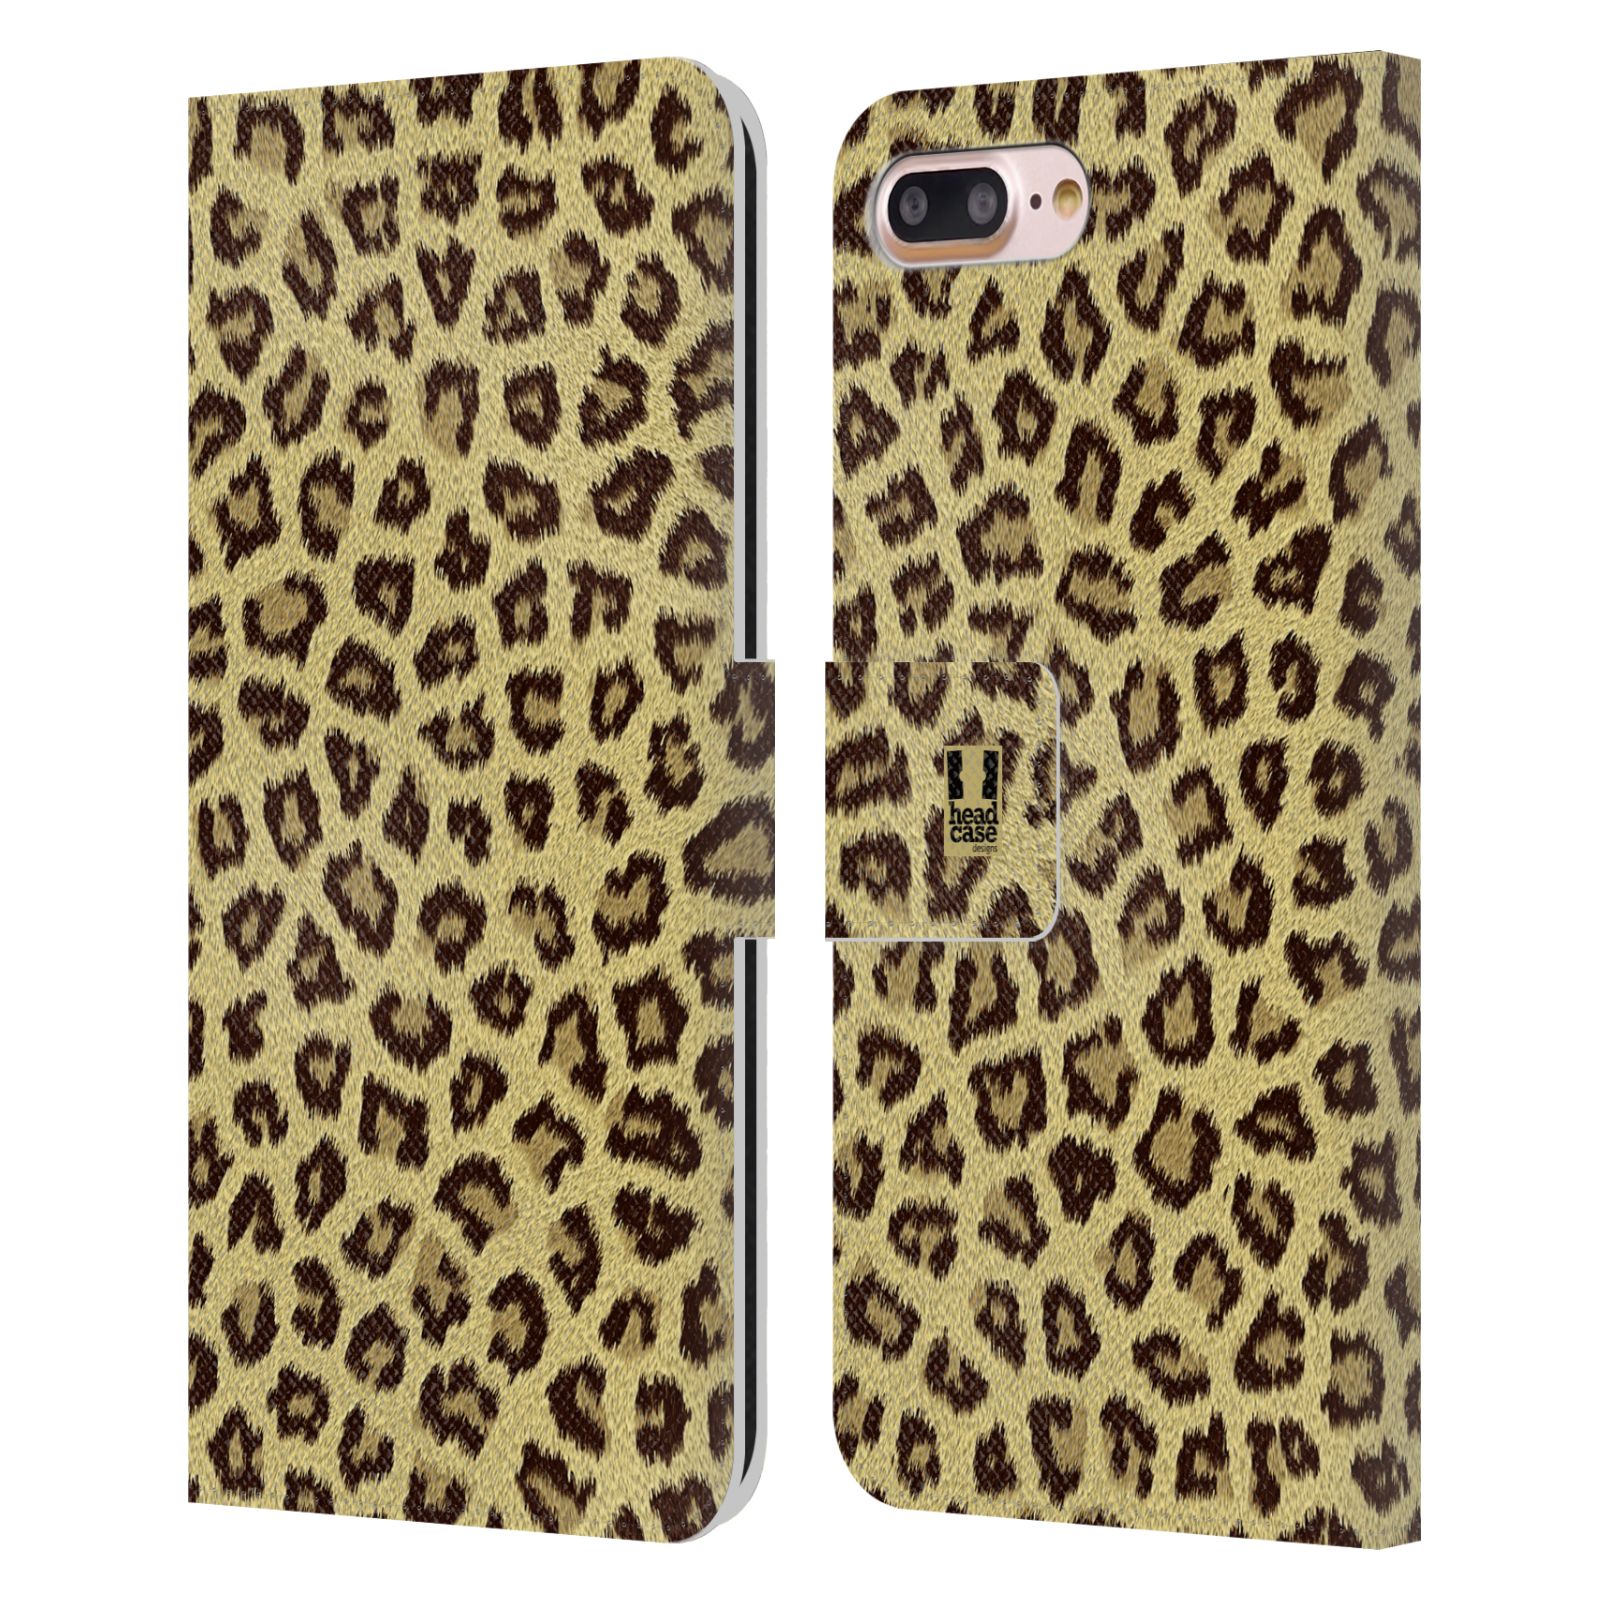 HEAD CASE Flipové pouzdro pro mobil Apple Iphone 7 PLUS / 8 PLUS zvíře srst divoká kolekce jaguár, gepard